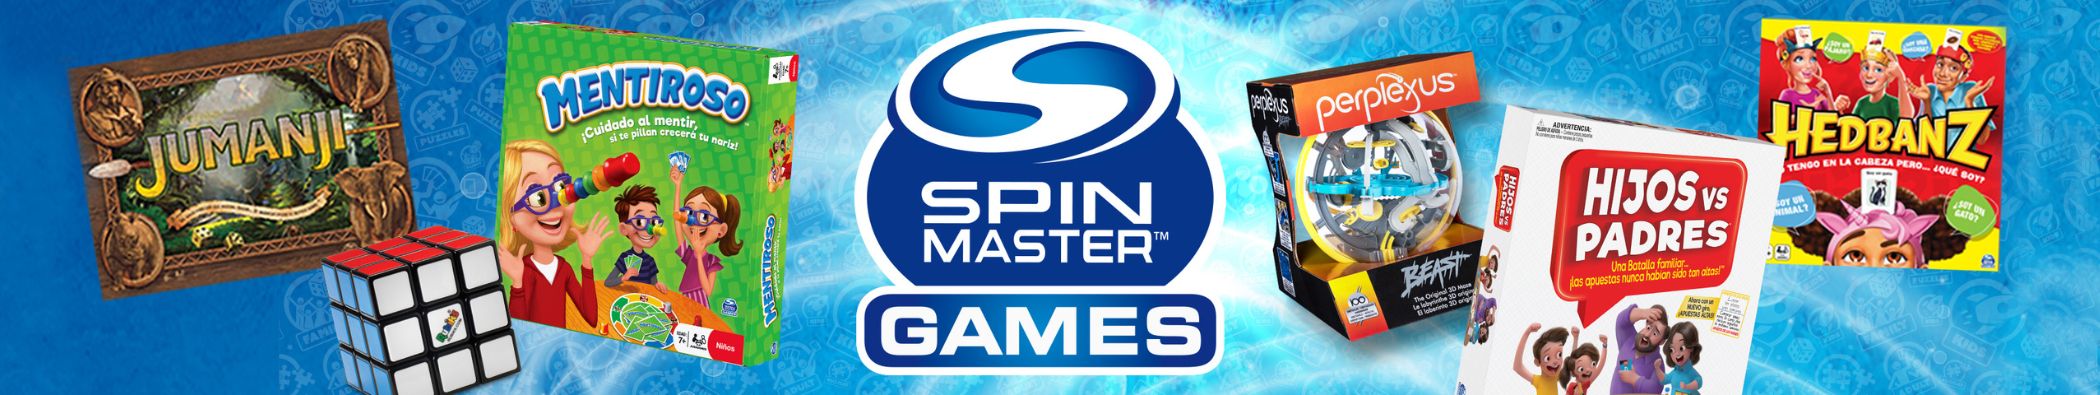 Jocs de taula Spin Master